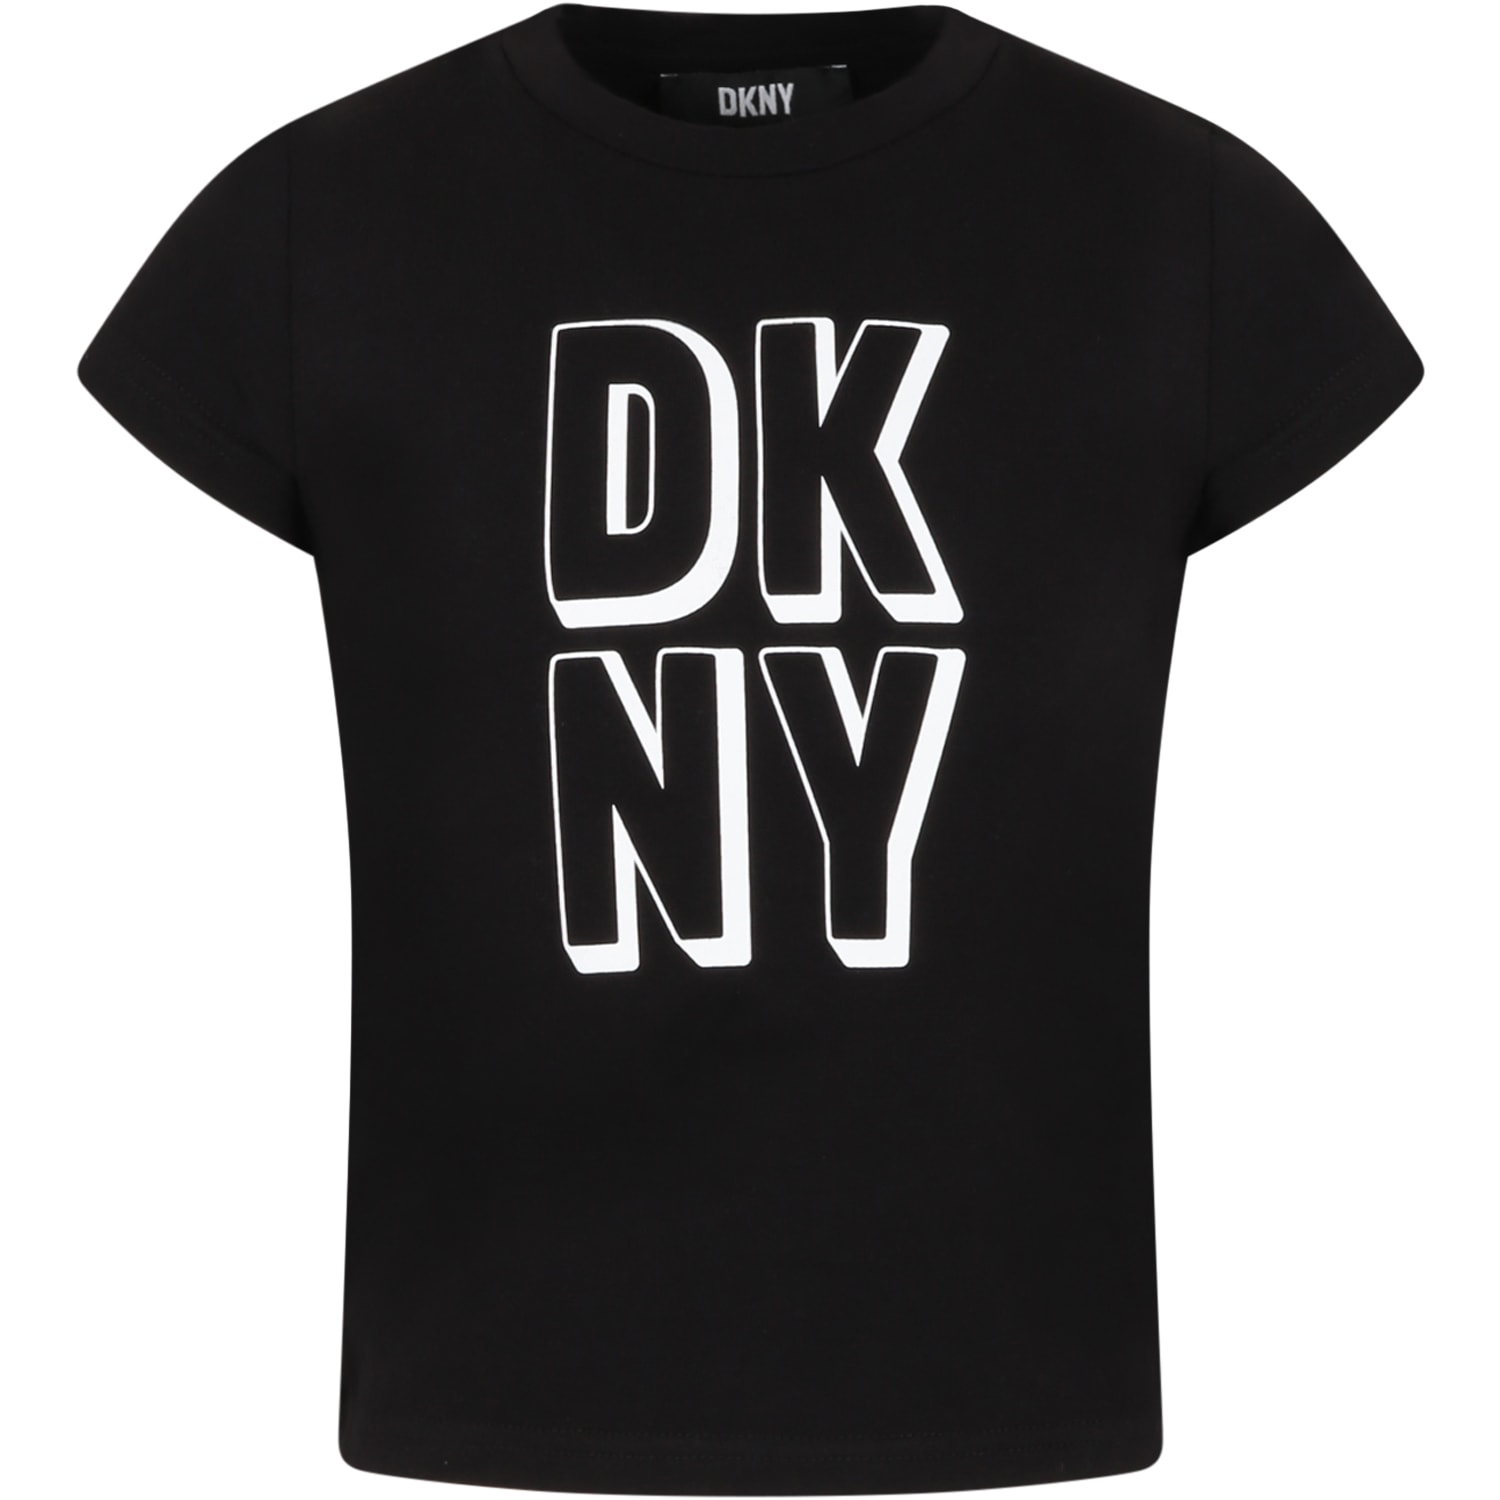 DKNY Black T-shirt For Girl With White Logo